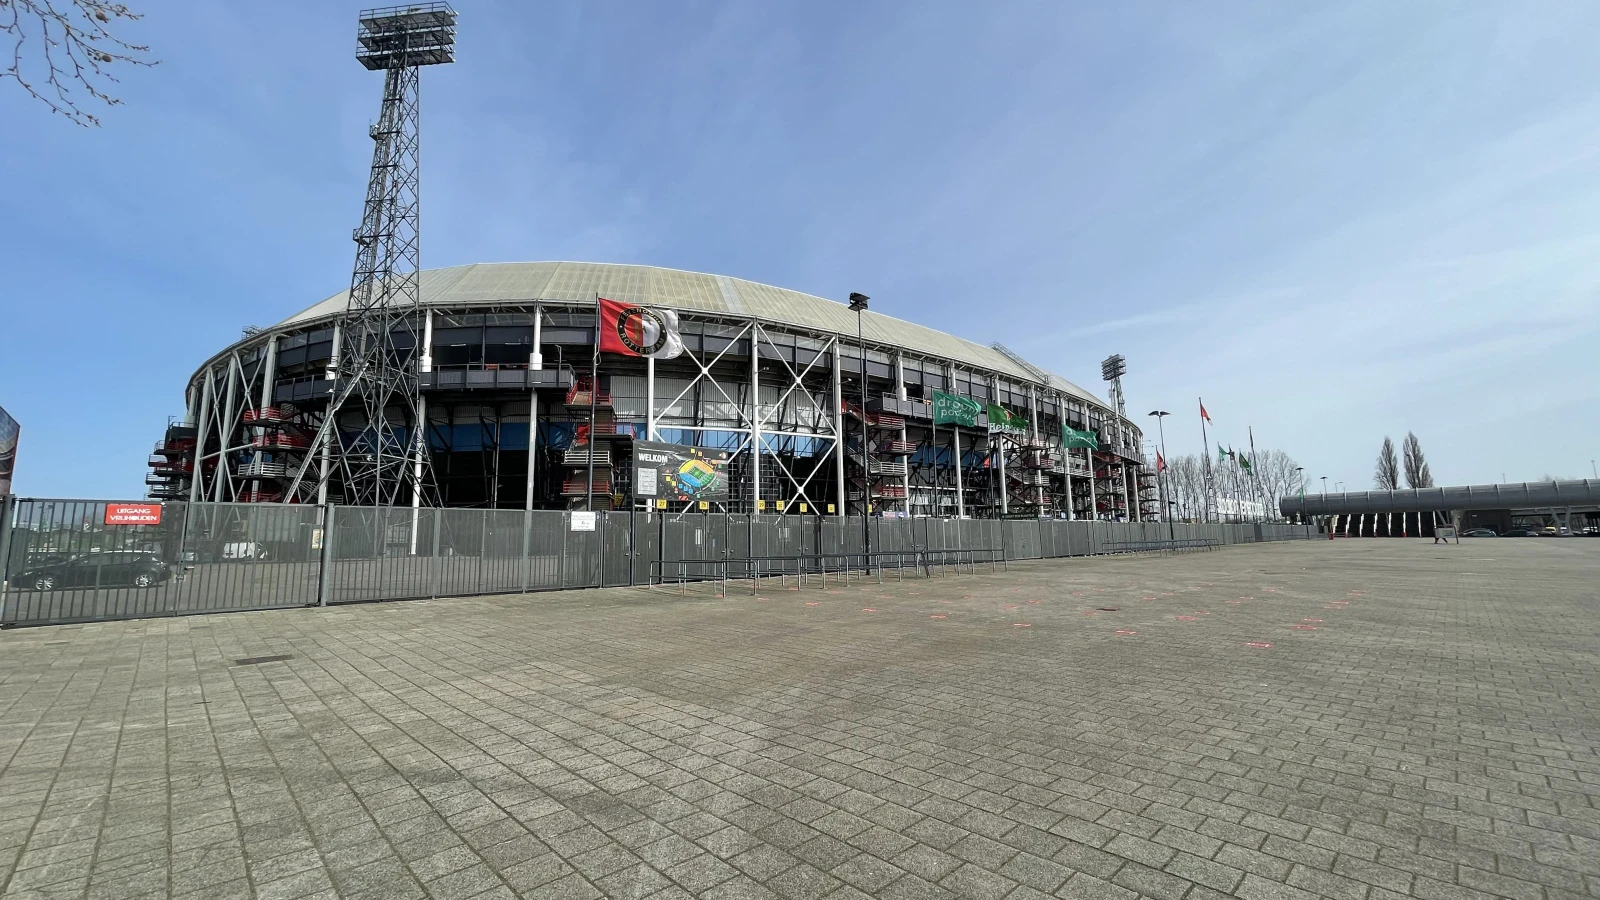 Oefenwedstrijd tussen Feyenoord en FC Kopenhagen live op Youtube pagina van Feyenoord